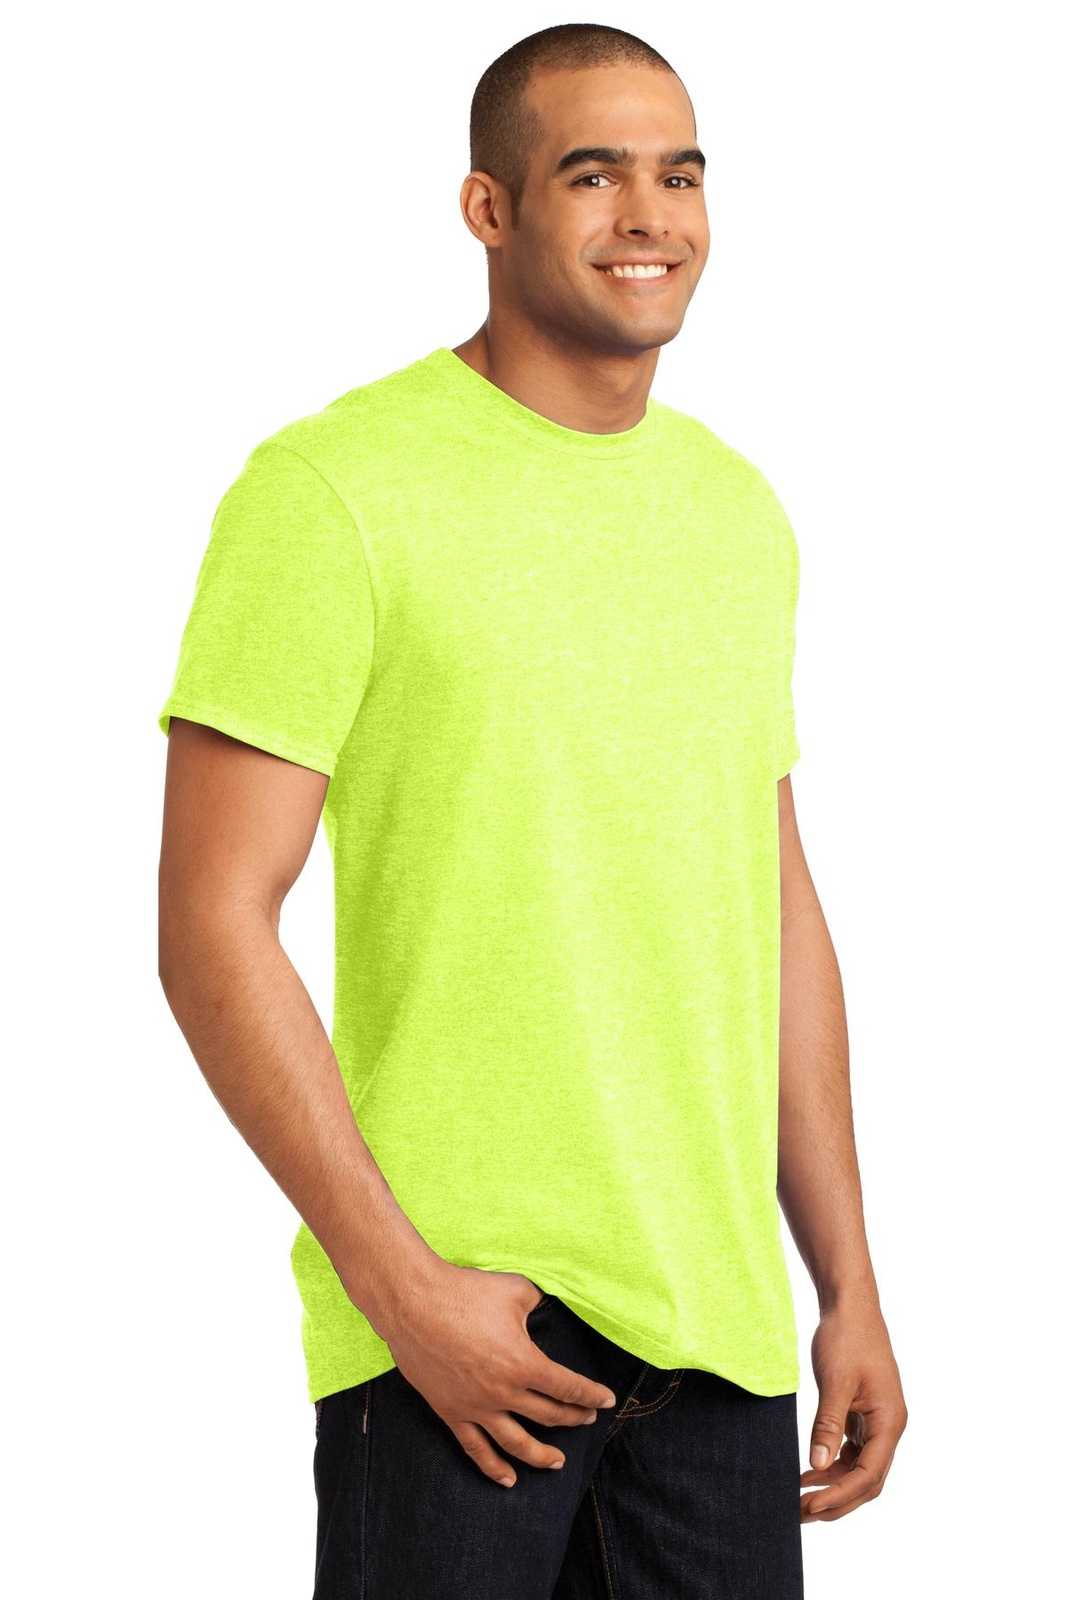 Hanes 4200 X-Temp T-Shirt - Neon Lemon Heather - HIT a Double